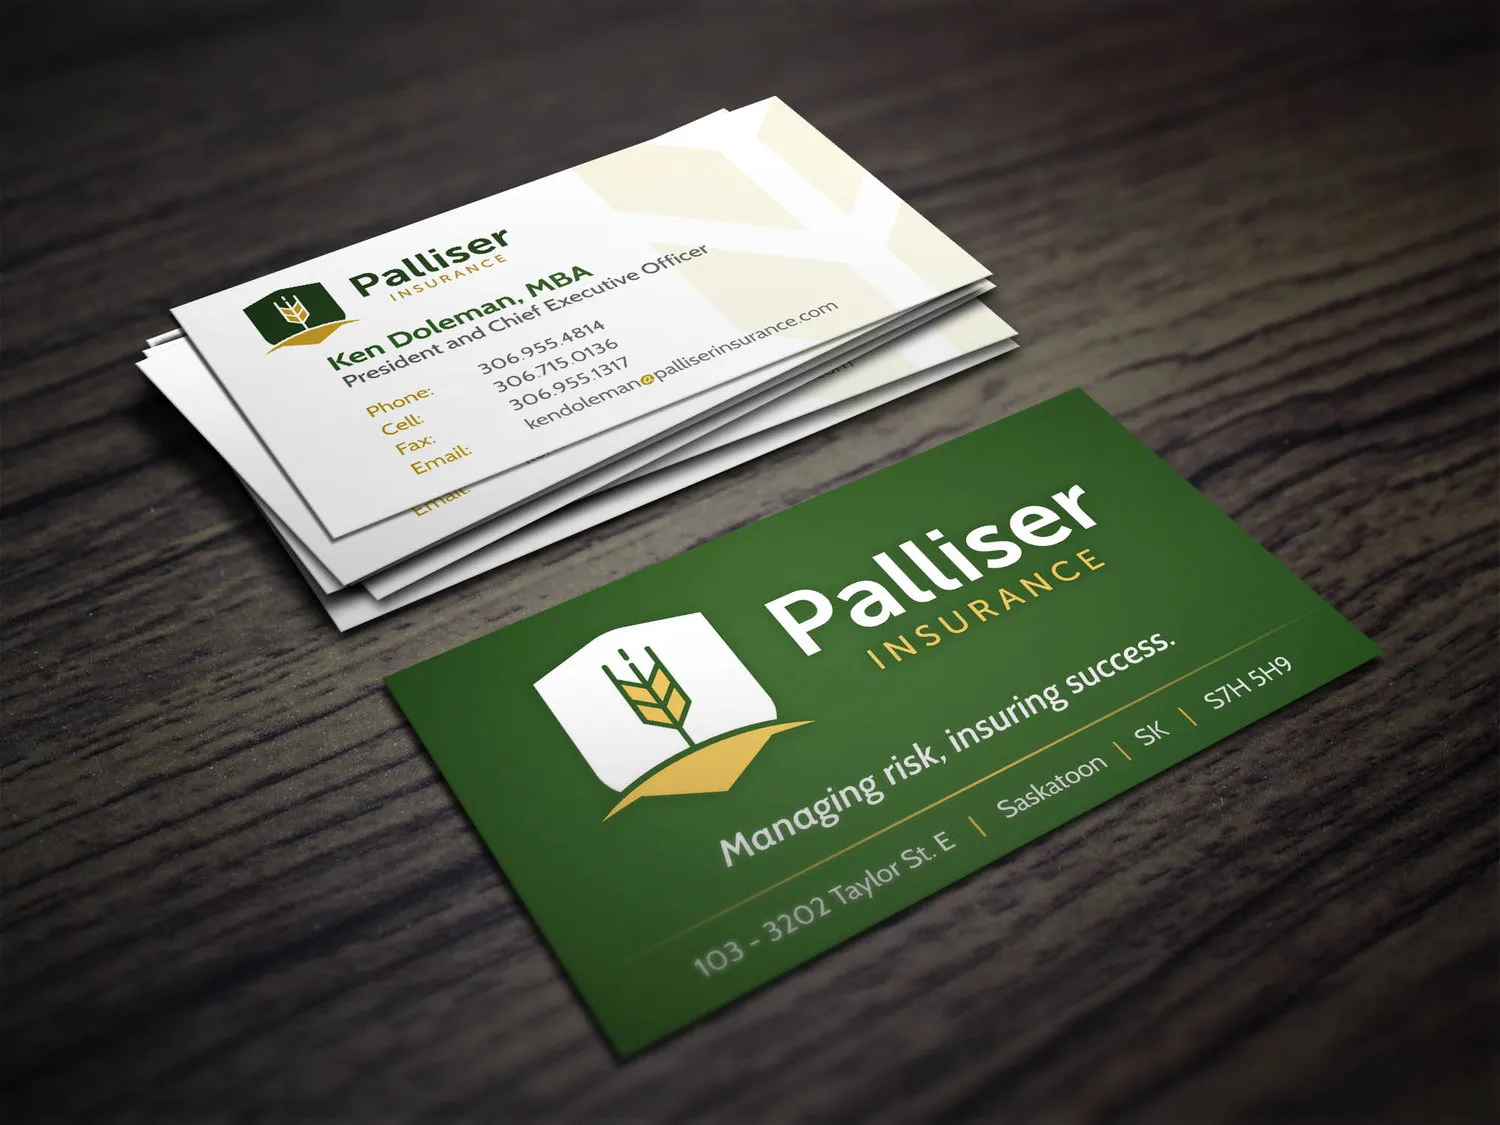 A business card designed for Palliser Insurance